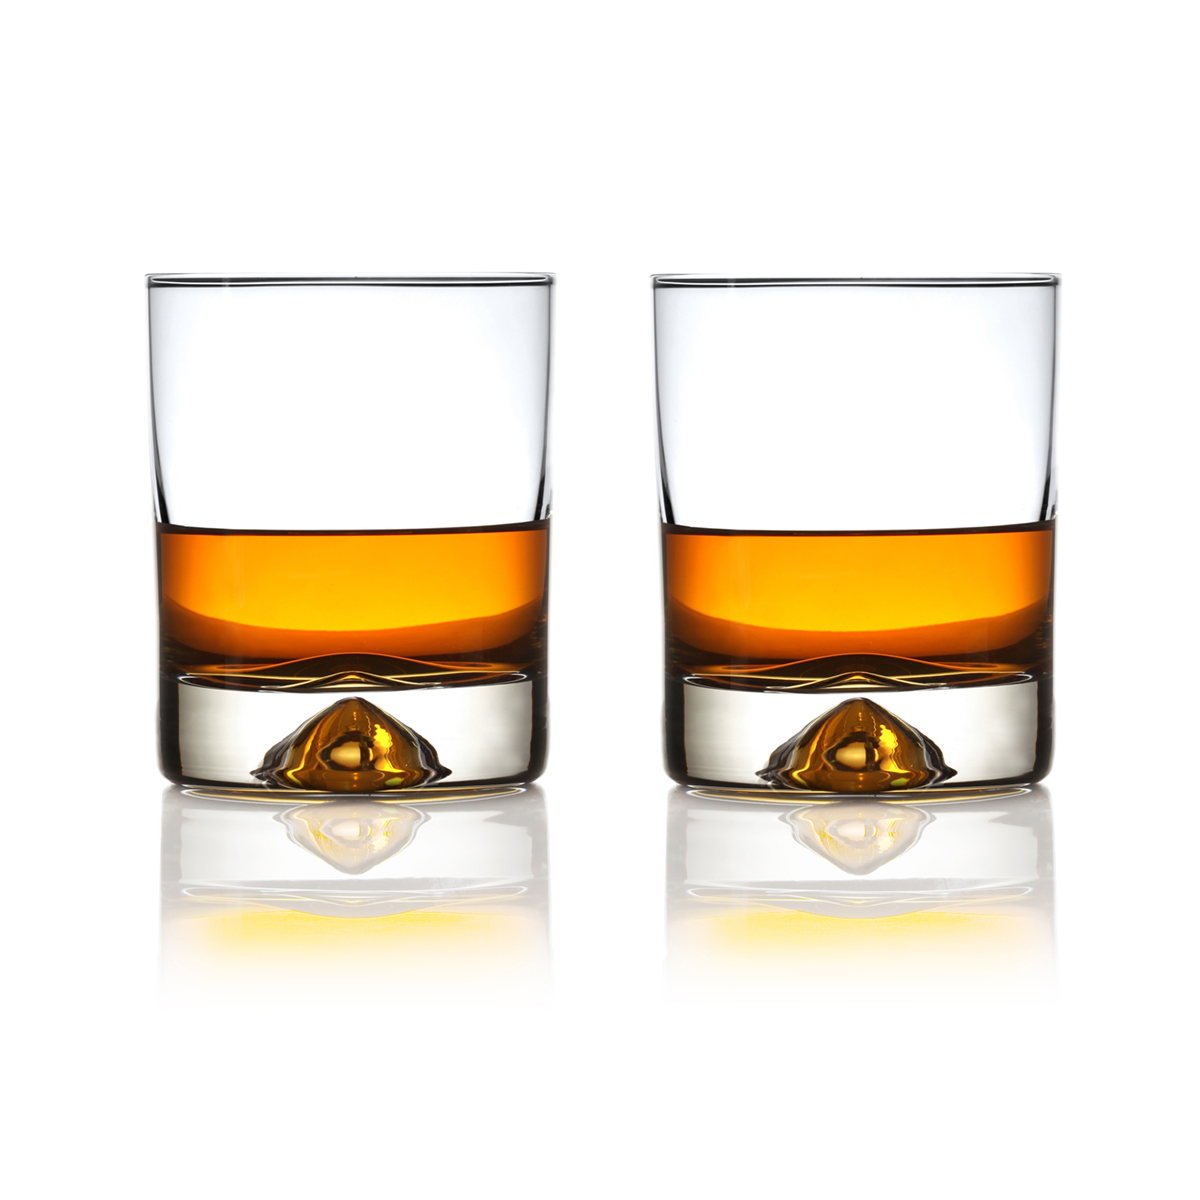 2 x Classic Whisky Tumbler (Dimple Base) - Handgefertigt aus Kristallglas